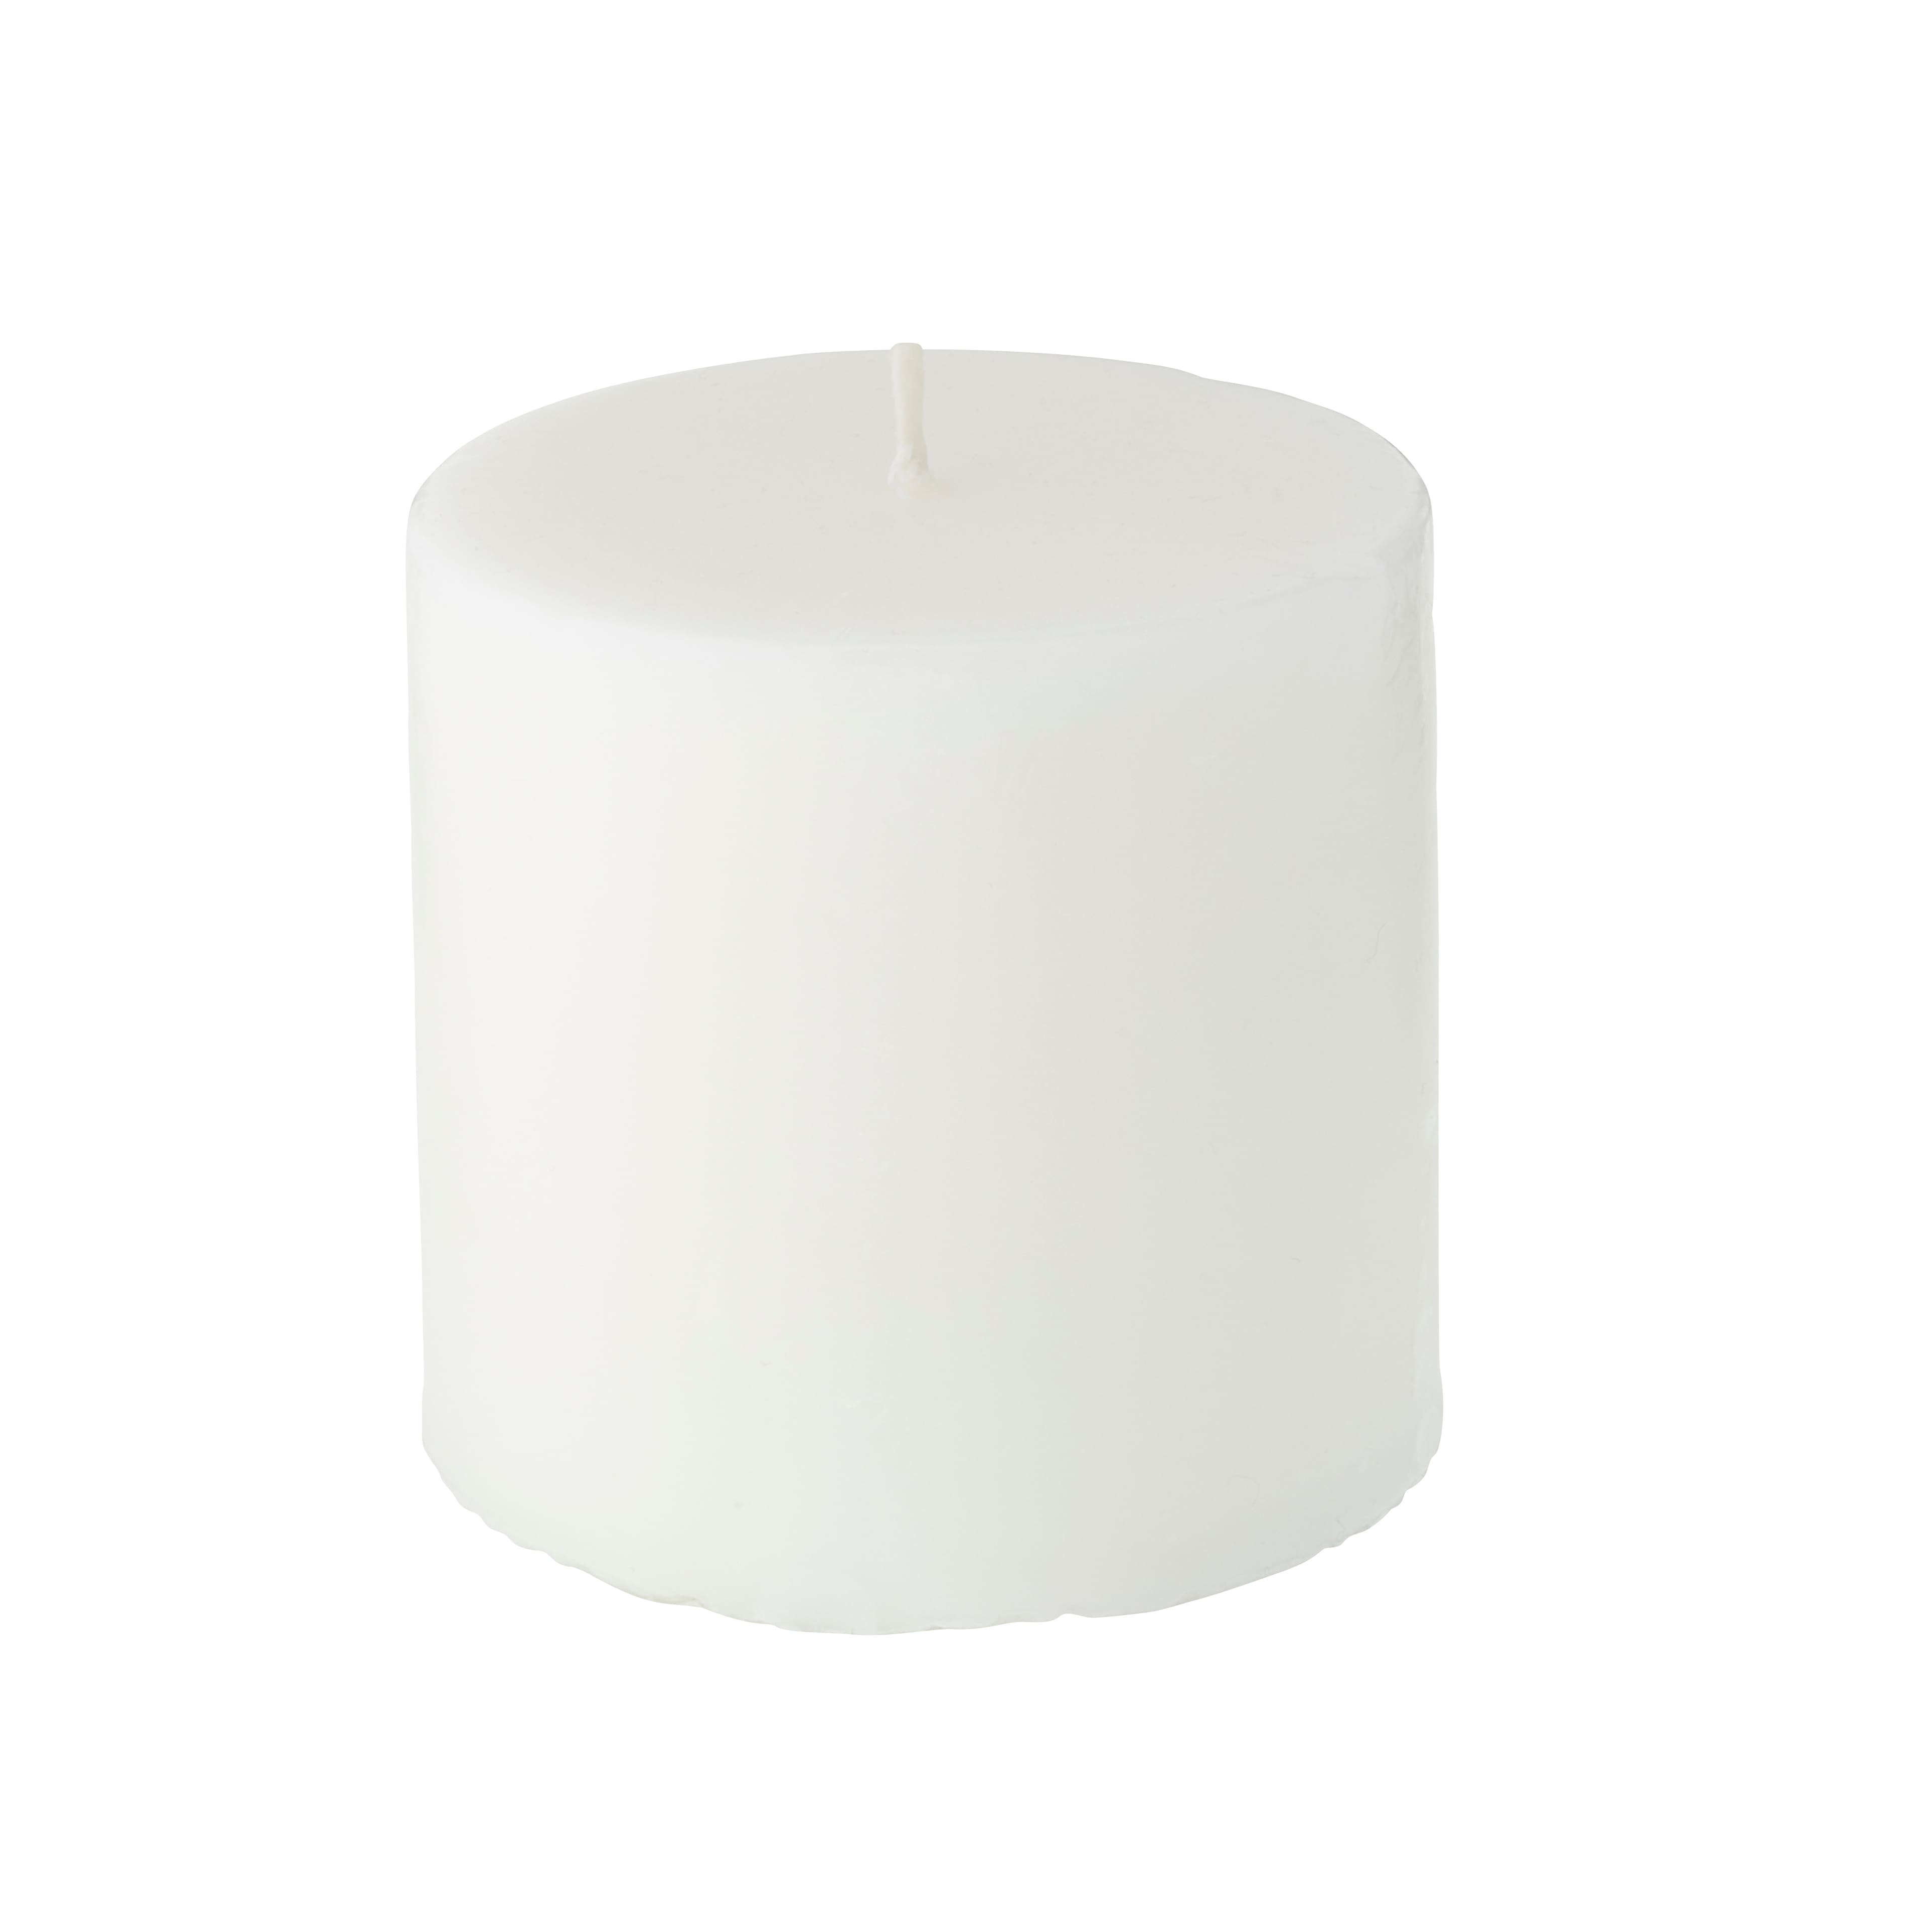 12 Packs: 3 ct. (36 total) Basic Elements&#x2122; White Pillar Candles by Ashland&#xAE;